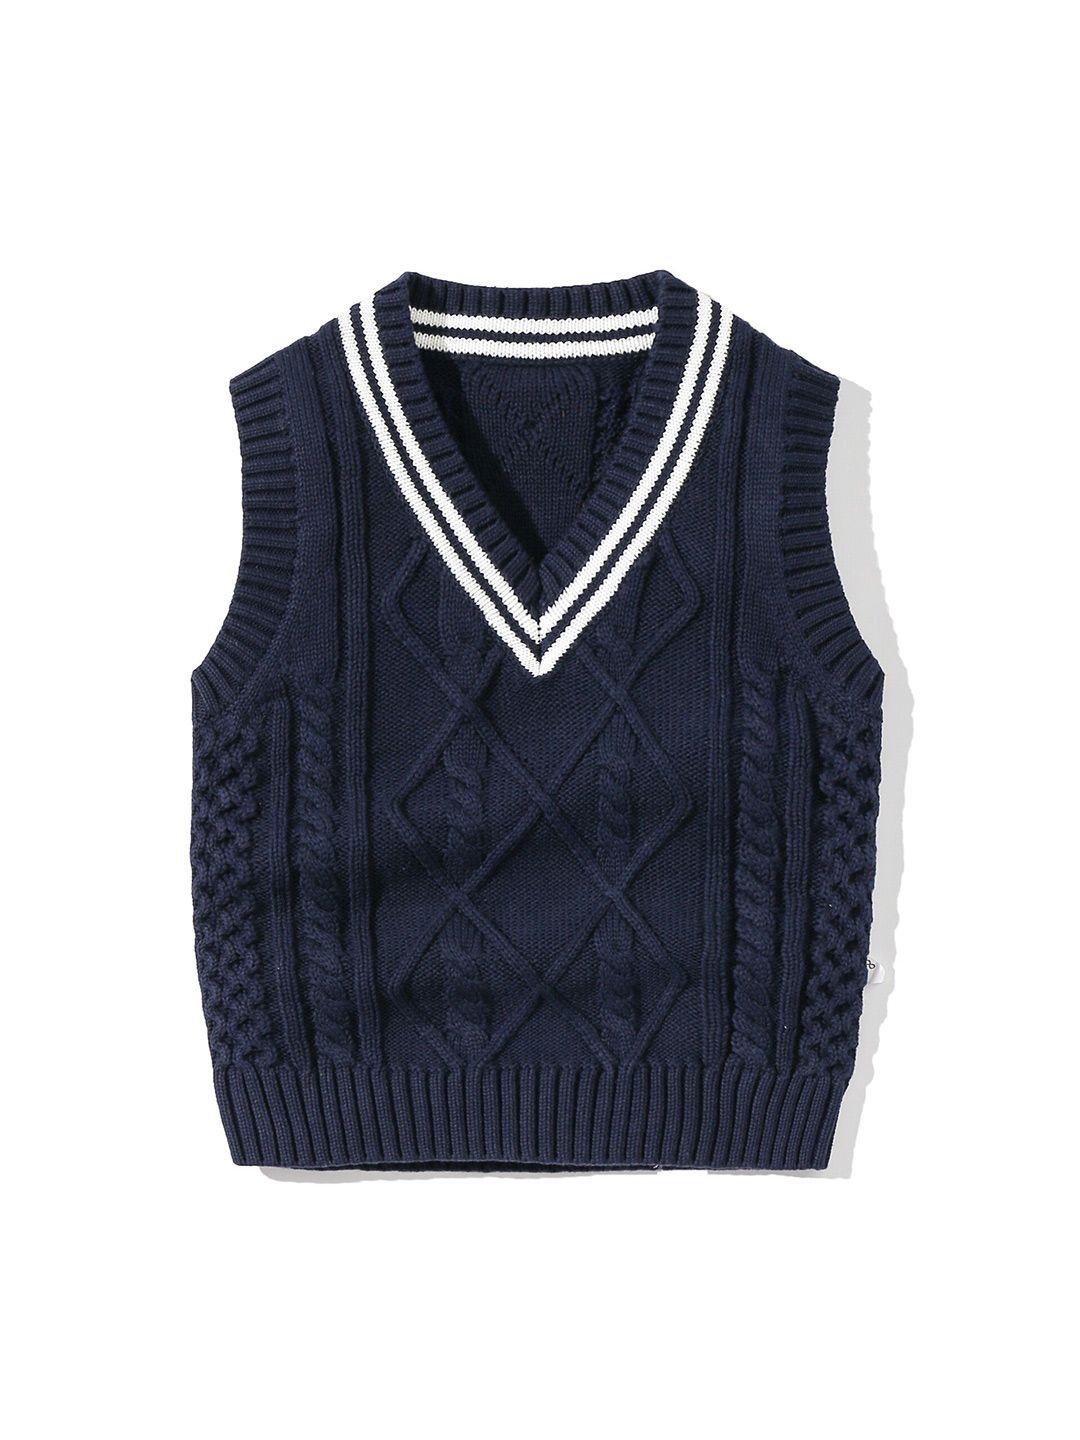 stylecast kids navy blue cable knit self design cotton sweater vest